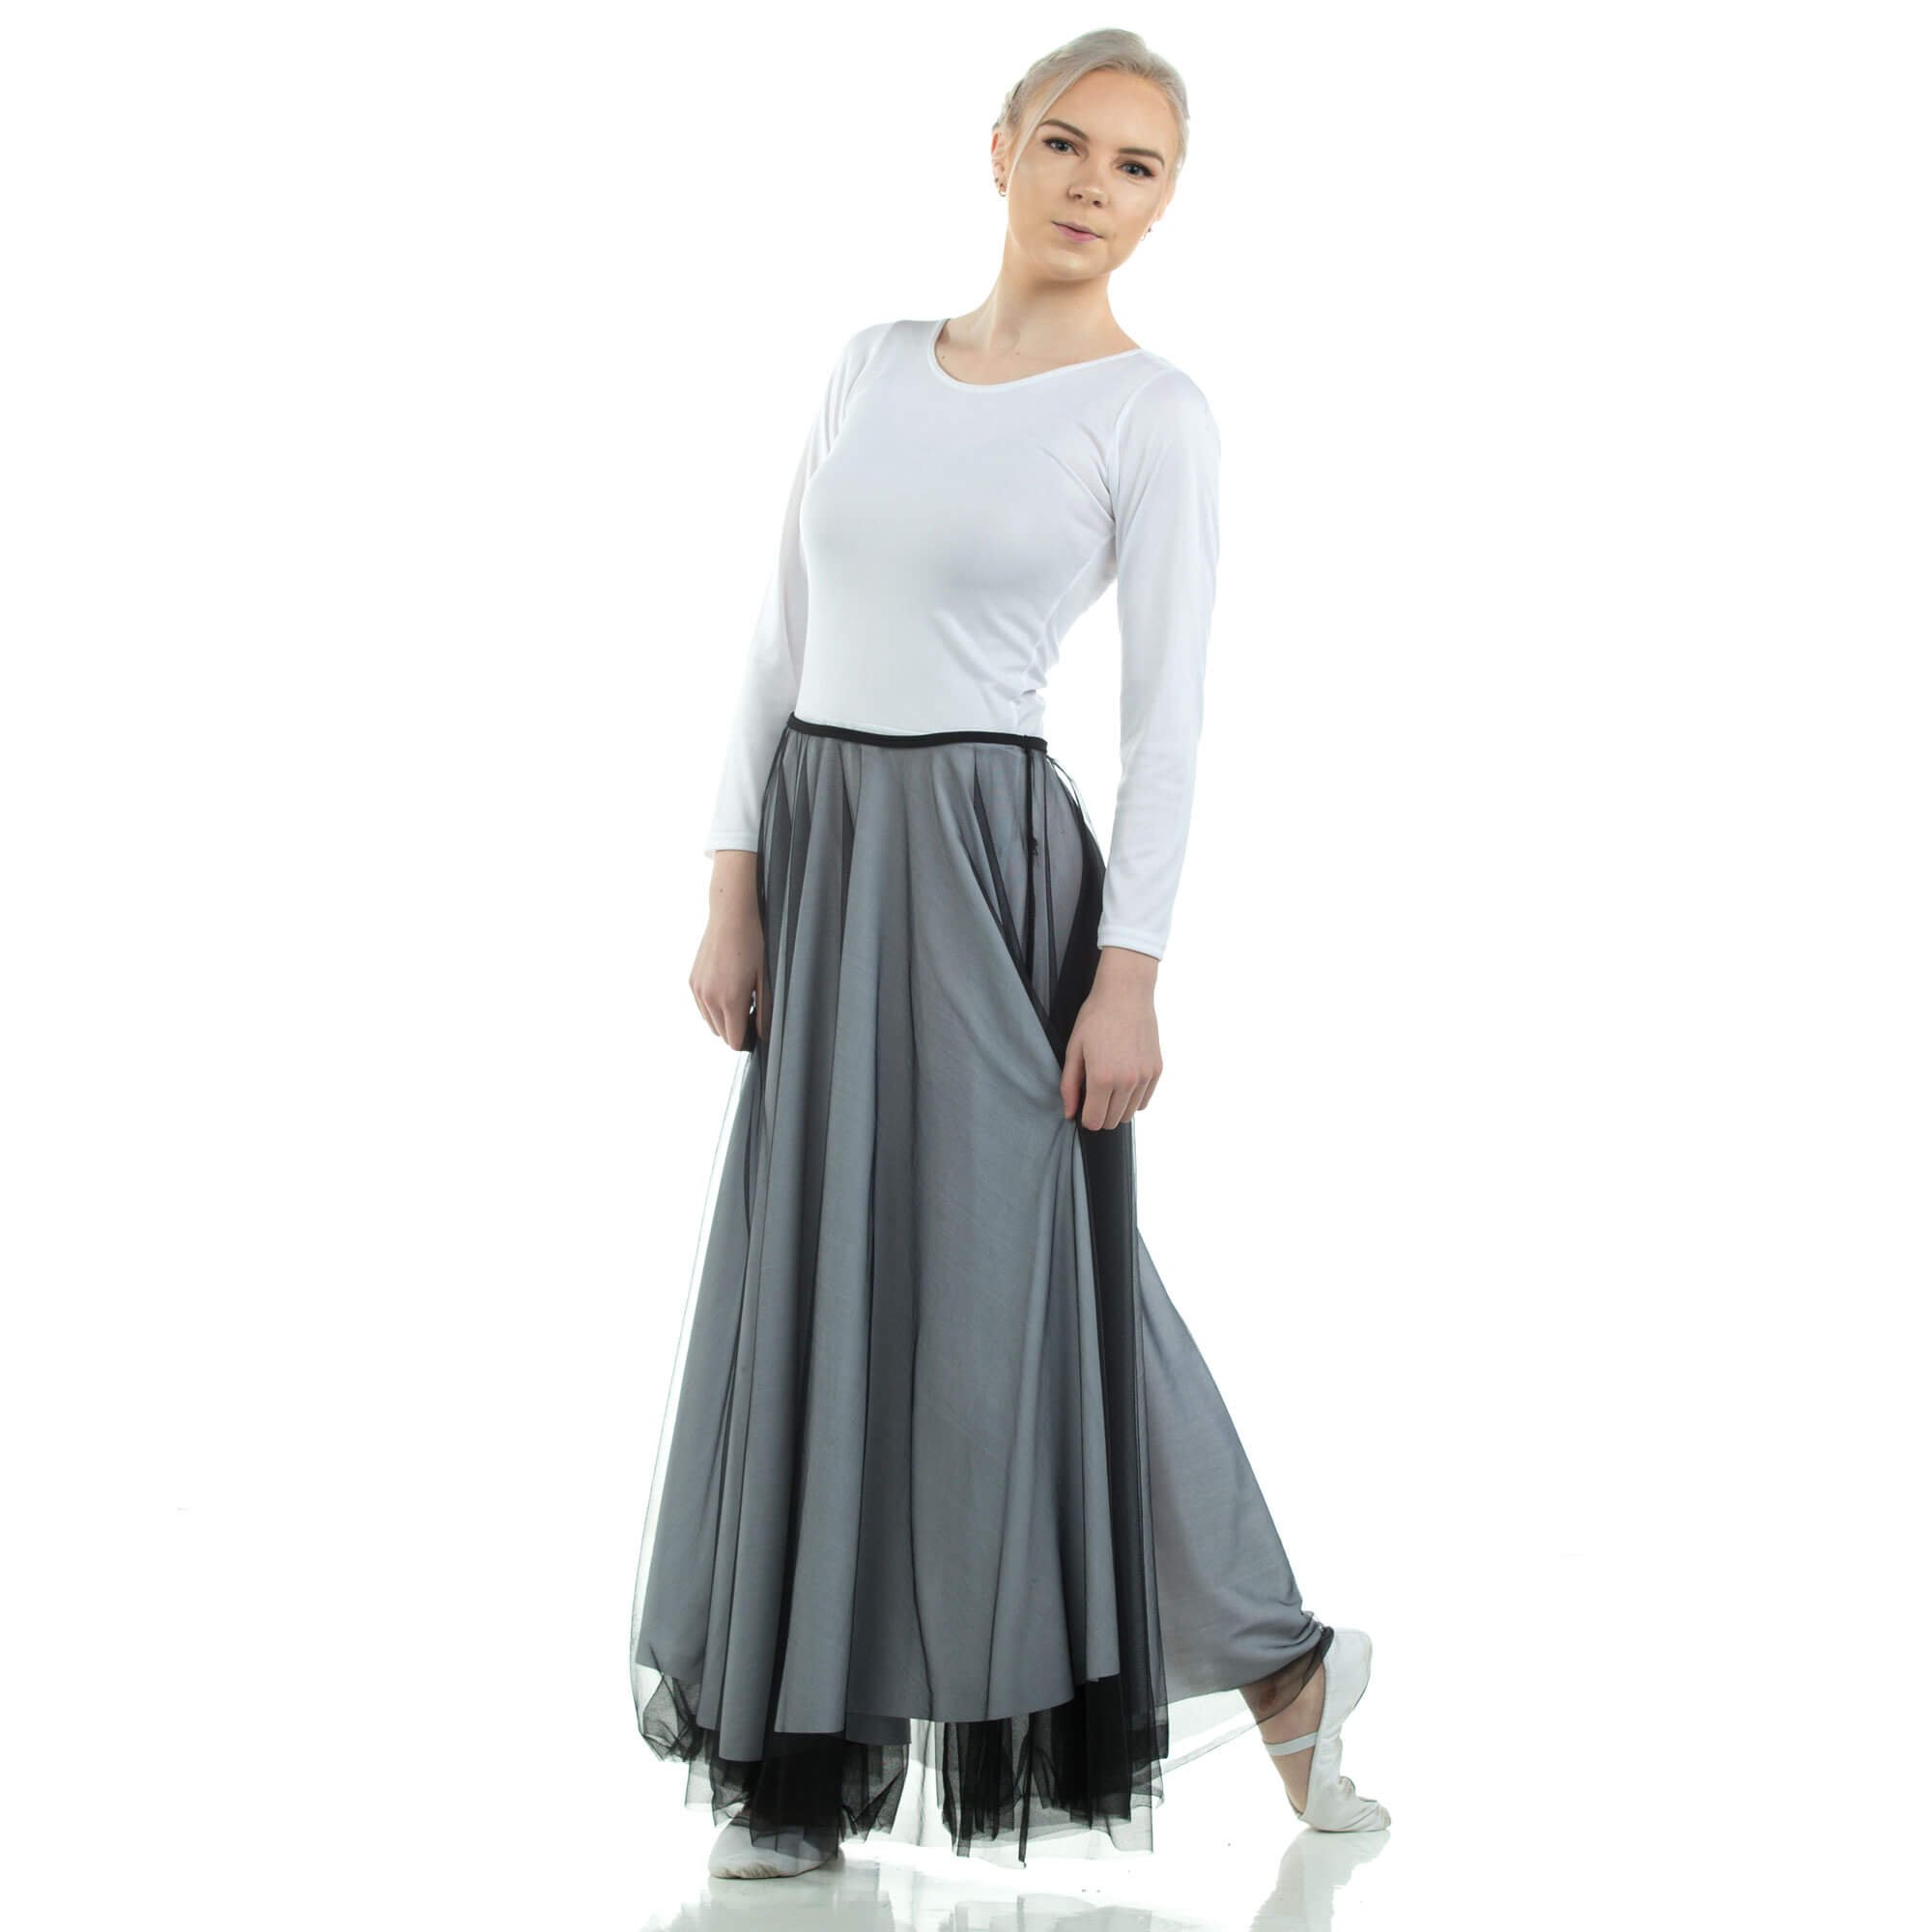 Danzcue Long Full Elastic Chiffon Skirt - Click Image to Close